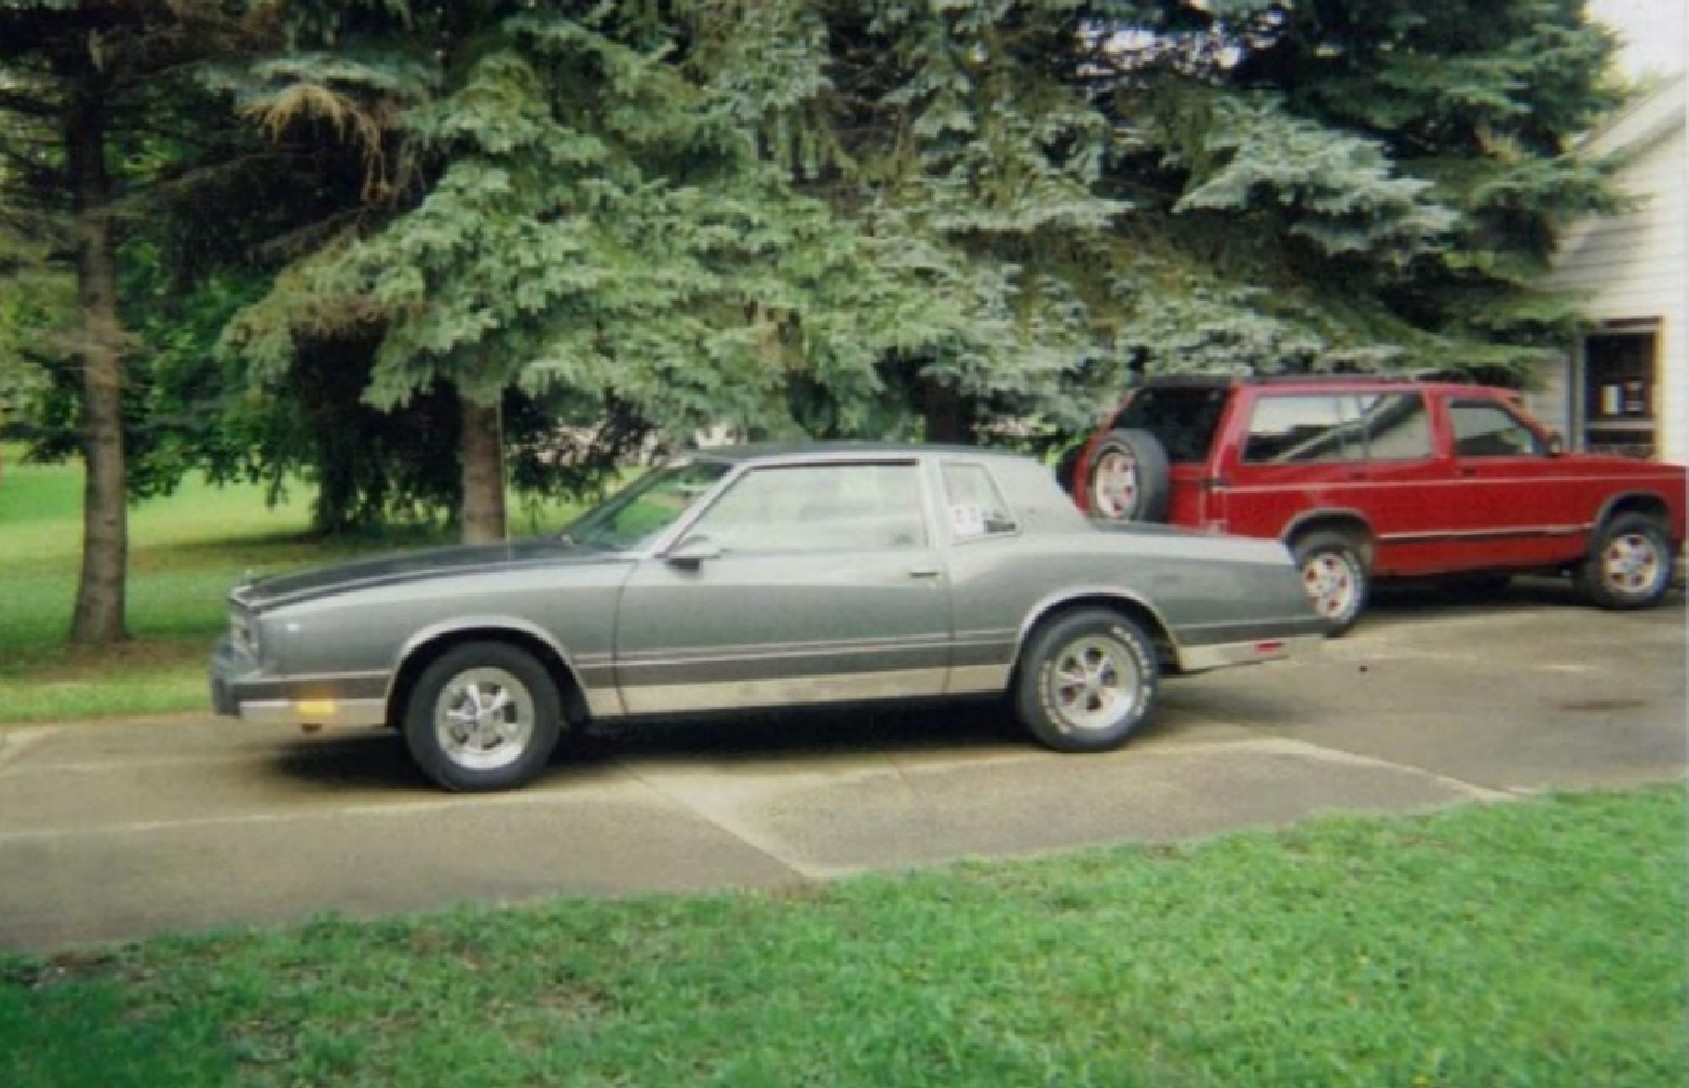  1986 Chevrolet Monte Carlo CL